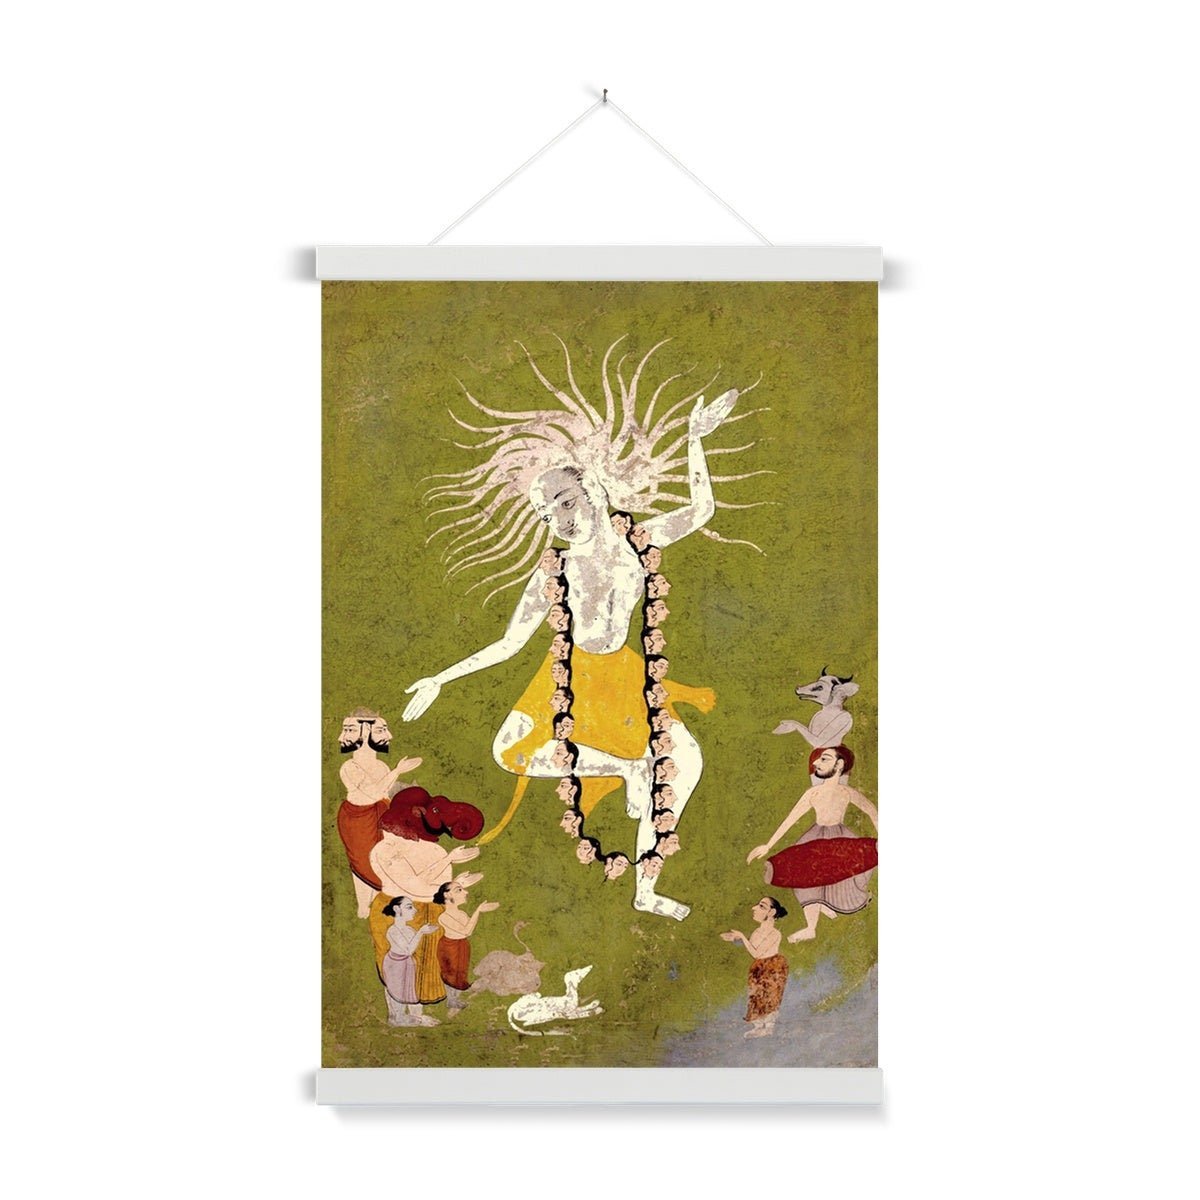 White Frame / A4 Portrait Lord Shiva in His Ferocious Aspect as Mahakala Dancing,  Yoga Decor, Indian Folk Art, Hindu Antique Fine Art Print with Thangka-Style Hanger